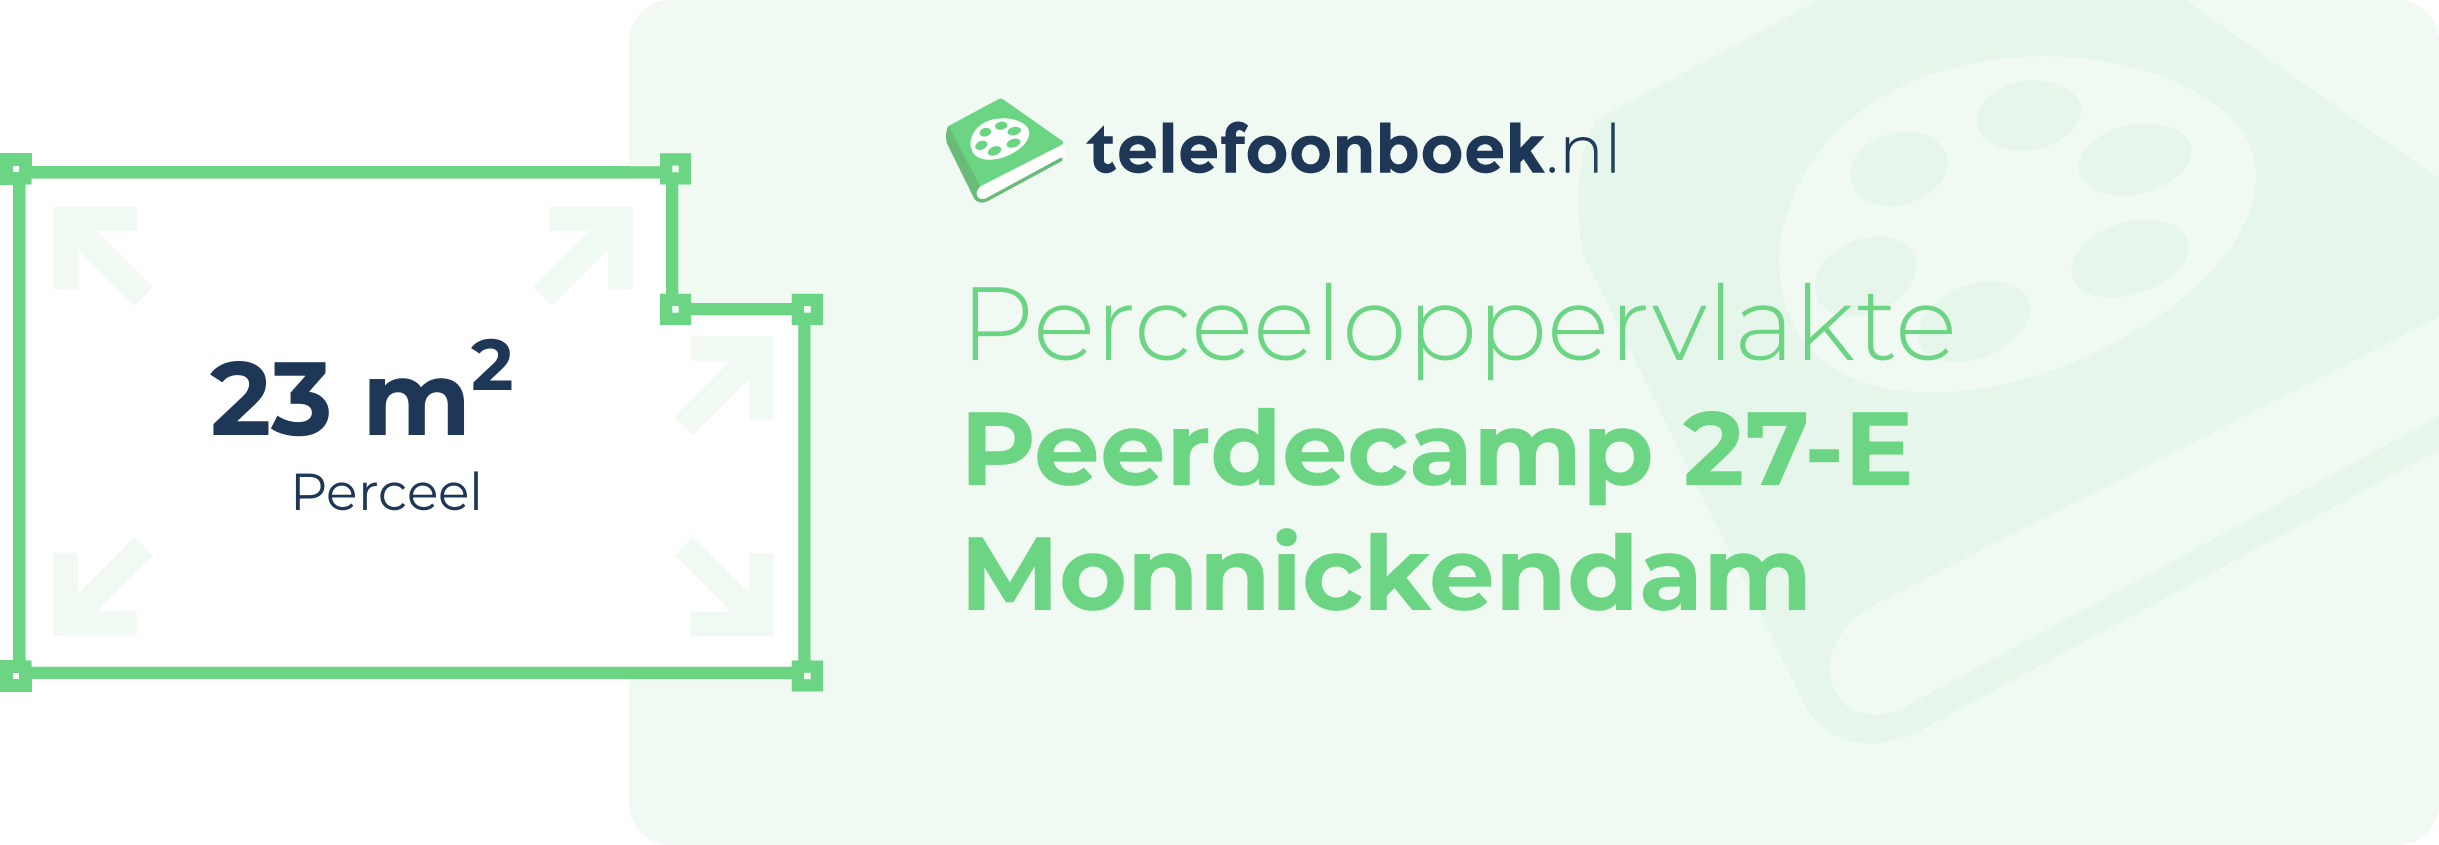 Perceeloppervlakte Peerdecamp 27-E Monnickendam